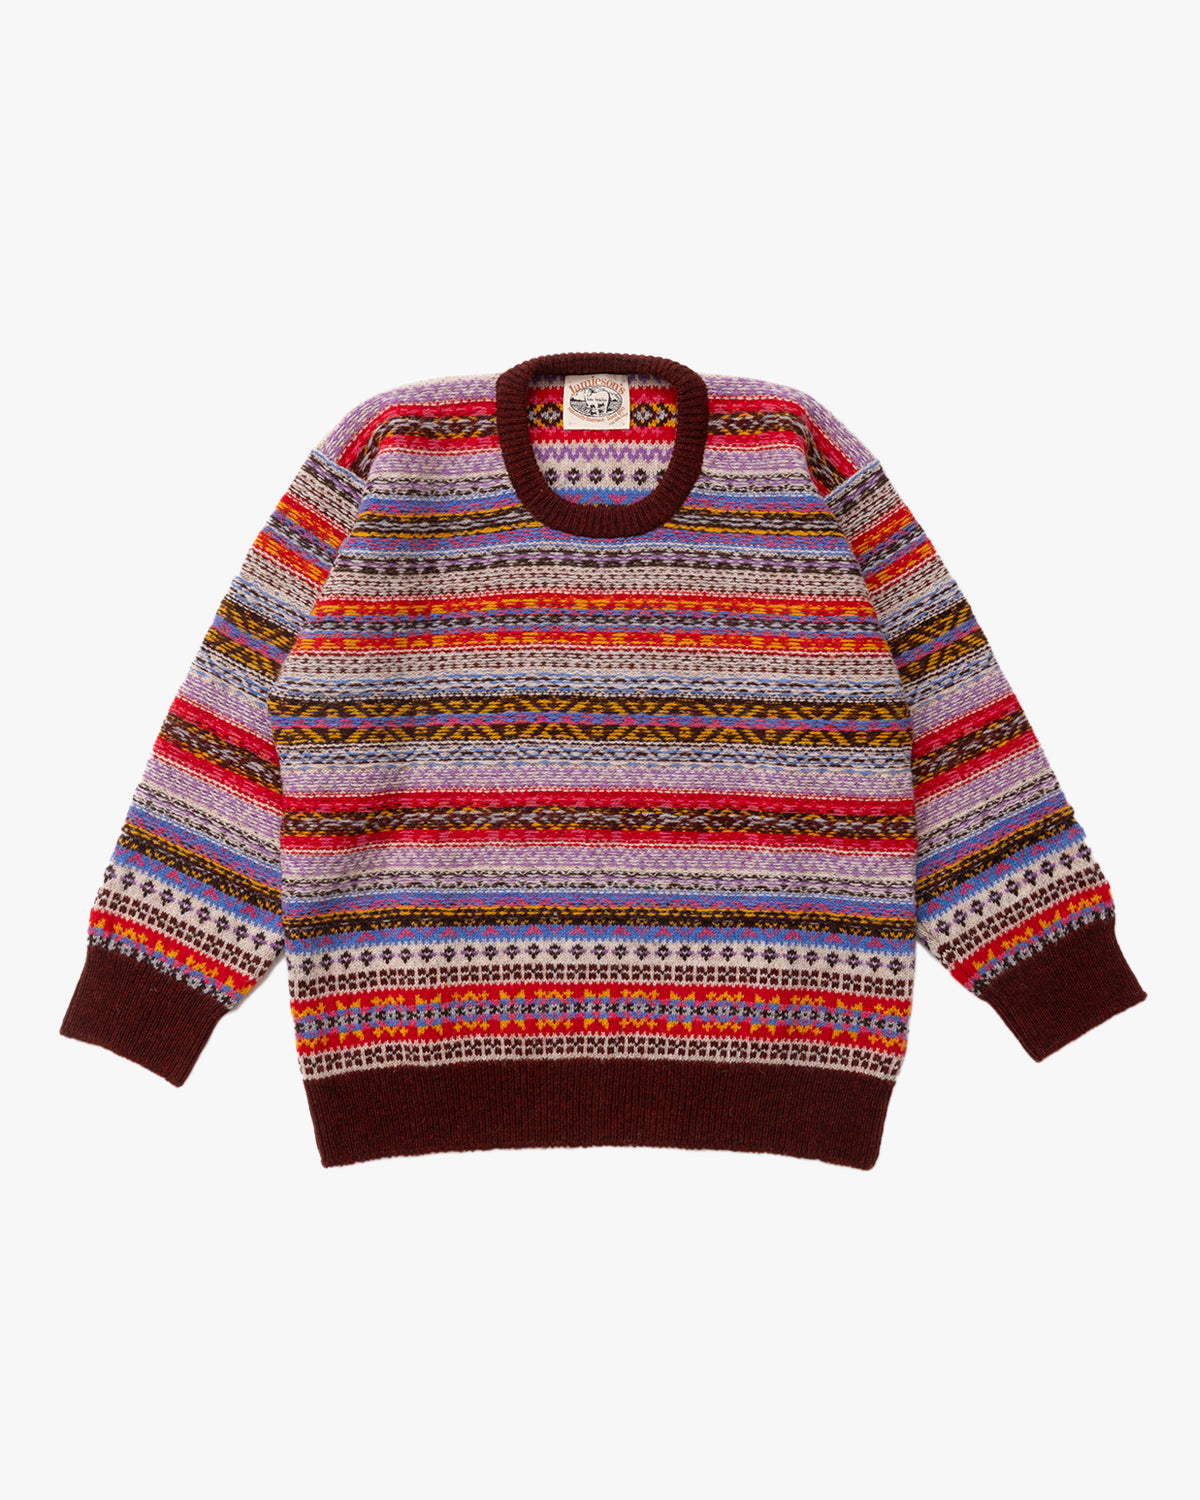 Jamieson’s x Kota Gushiken Reverse Stitch Fair Isle Sweater / Brown